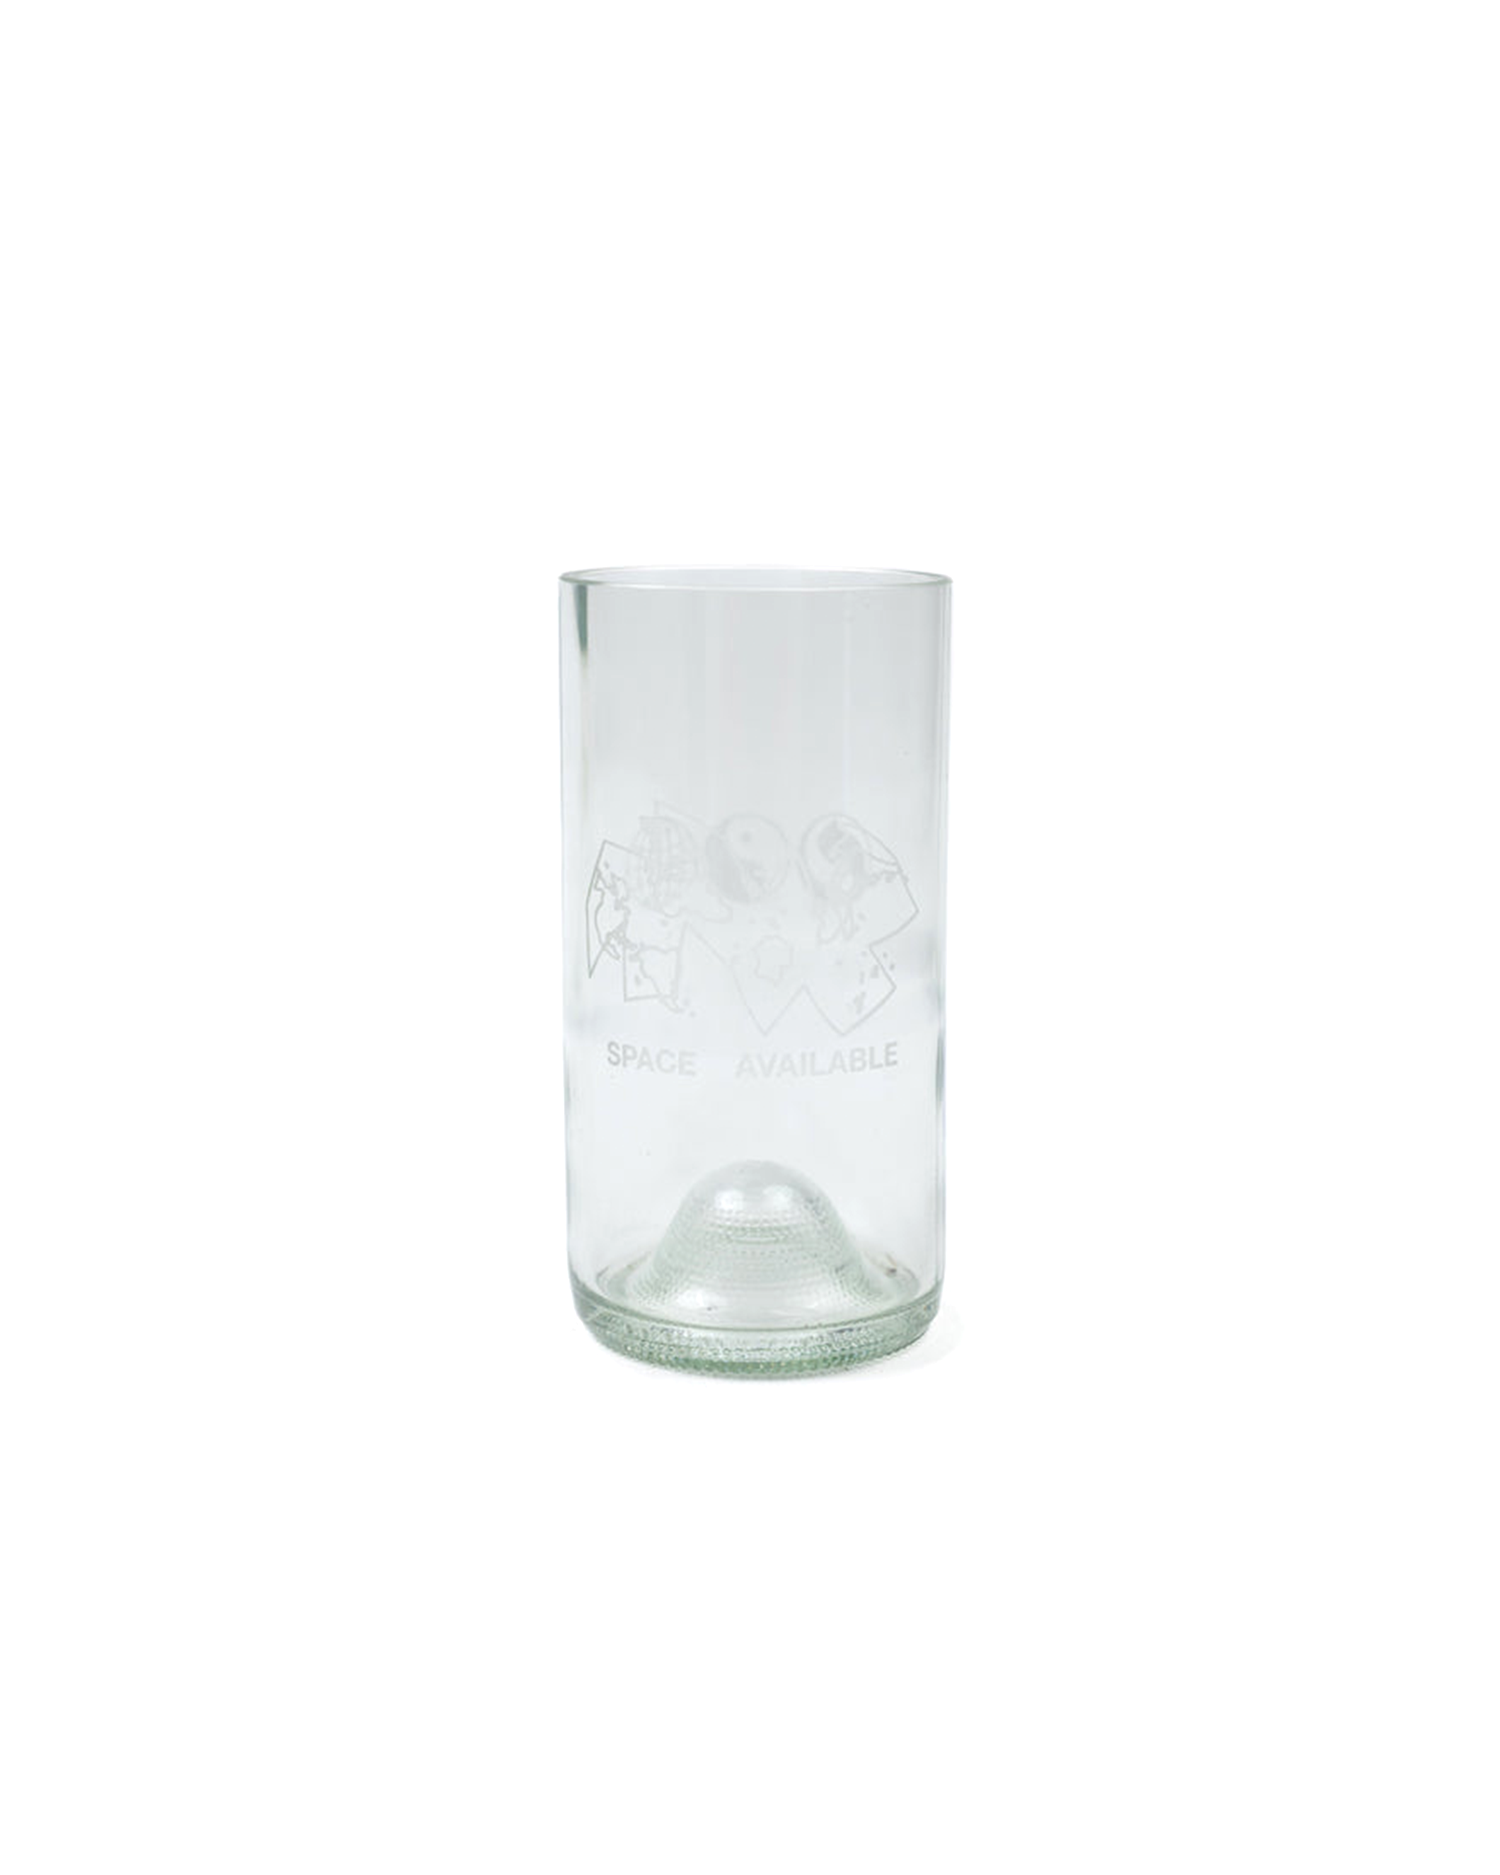 Woven Ecologi Vase - Natural Mix